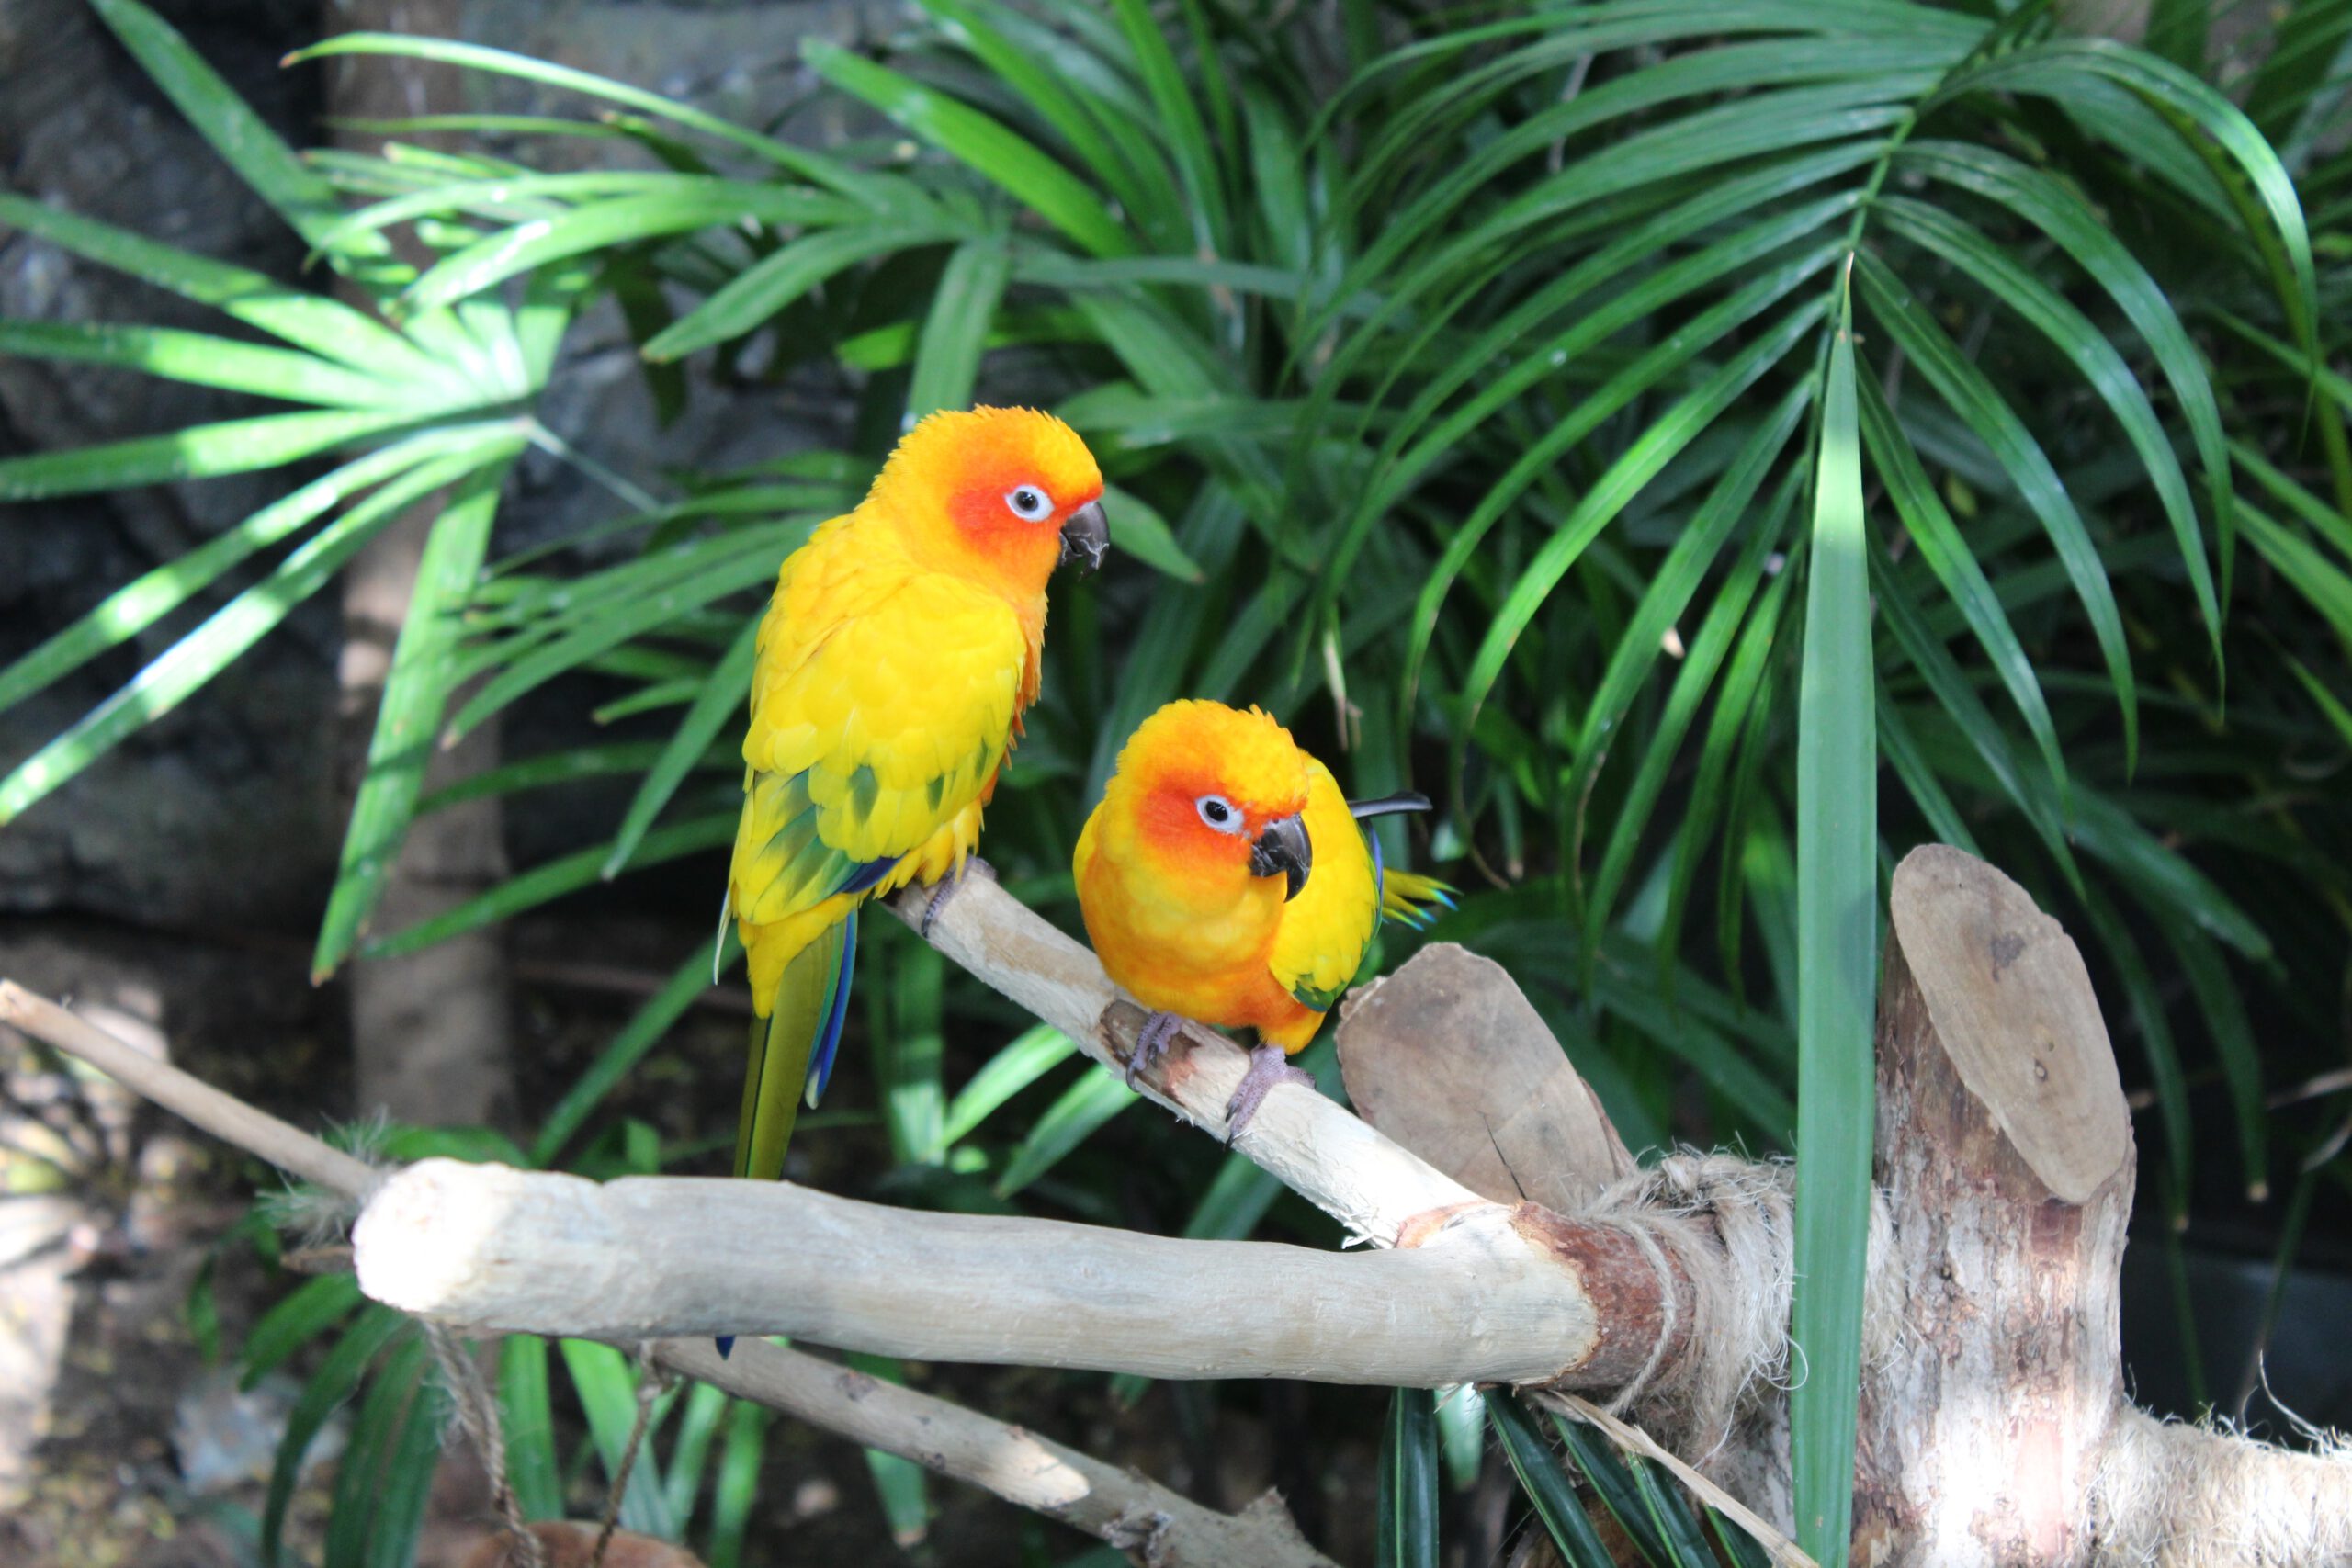 The Green Planet Dubai - Yellow parrots